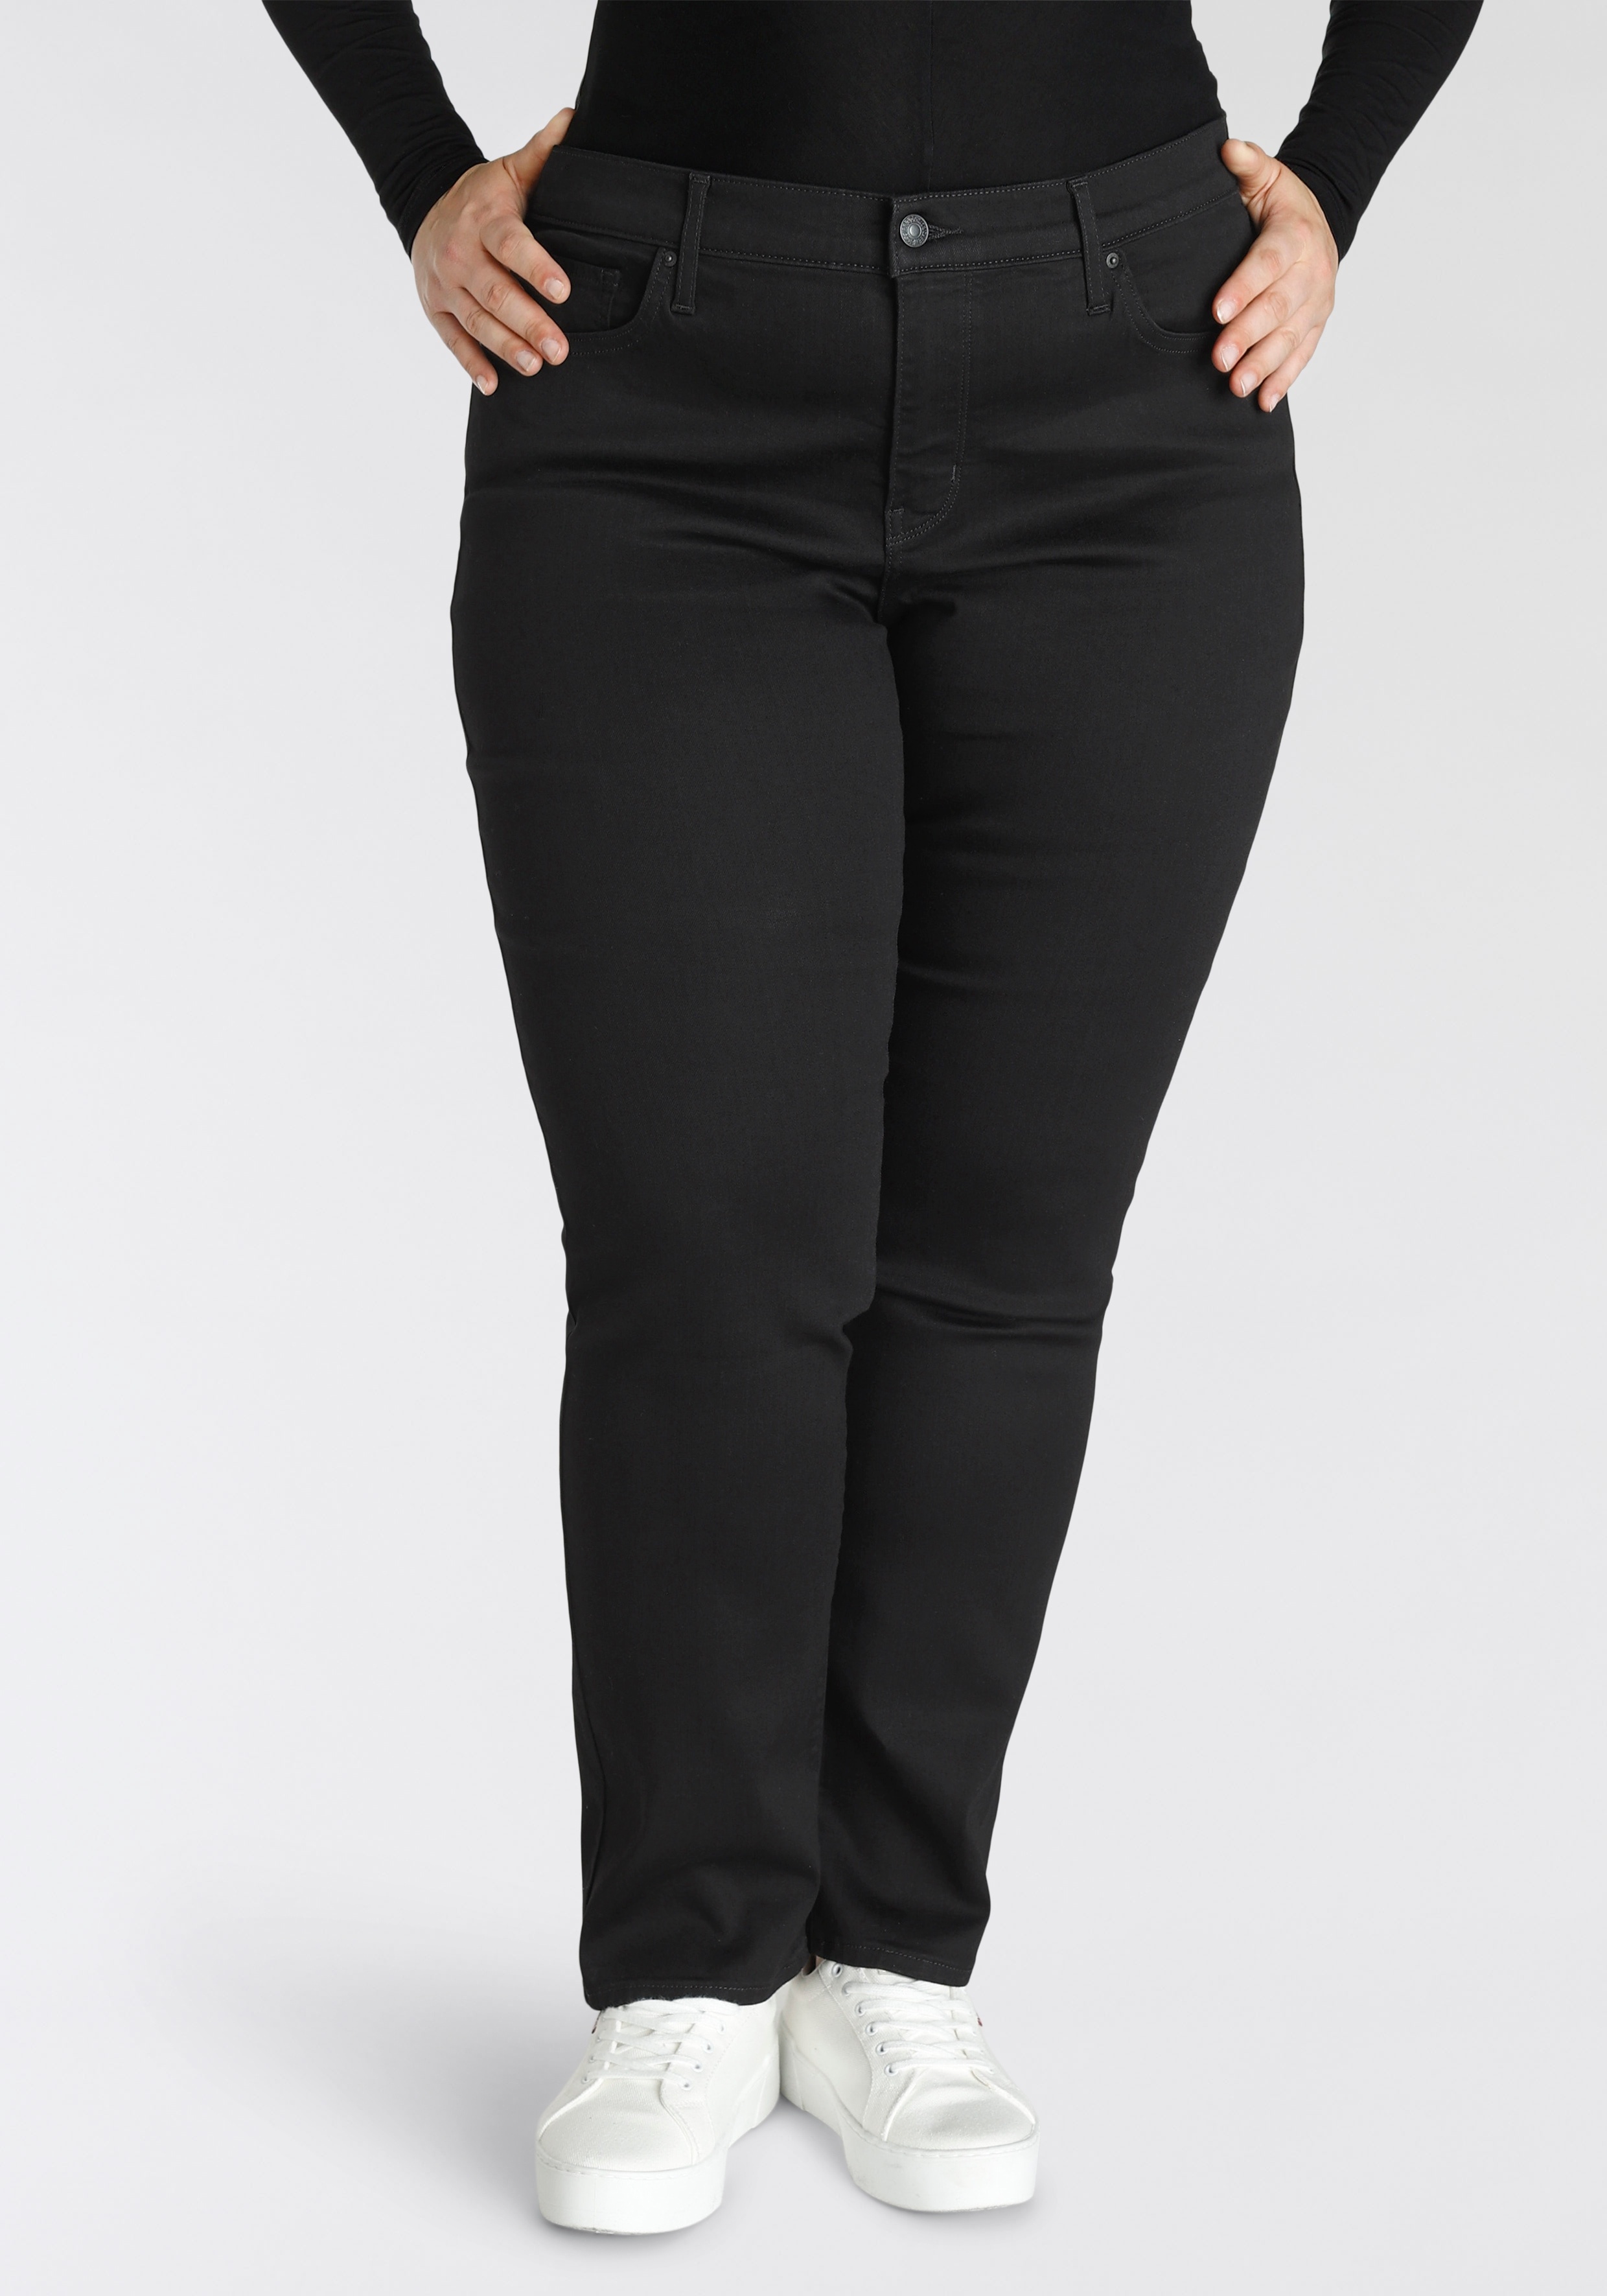 Straight-Jeans LEVI'S PLUS "314 Shaping Straight" Gr. 20 (50), Länge 34, schwarz (soft black) Damen Jeans Gerade